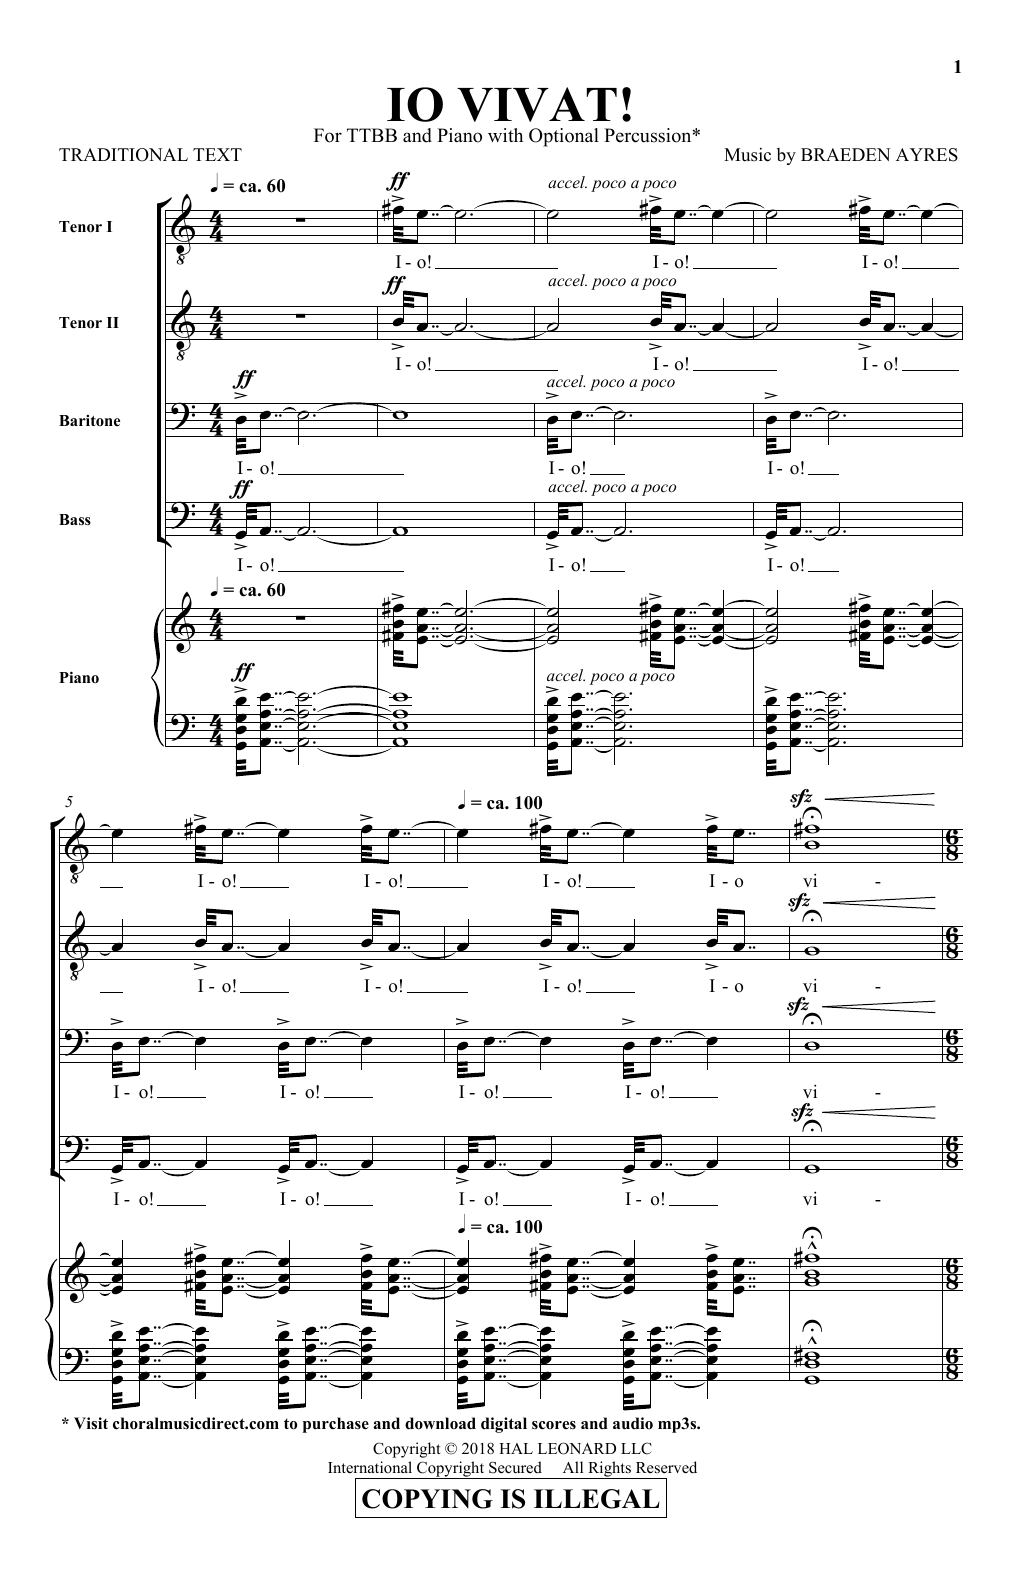 Braeden Ayres Io Vivat! Sheet Music Notes & Chords for TTBB - Download or Print PDF